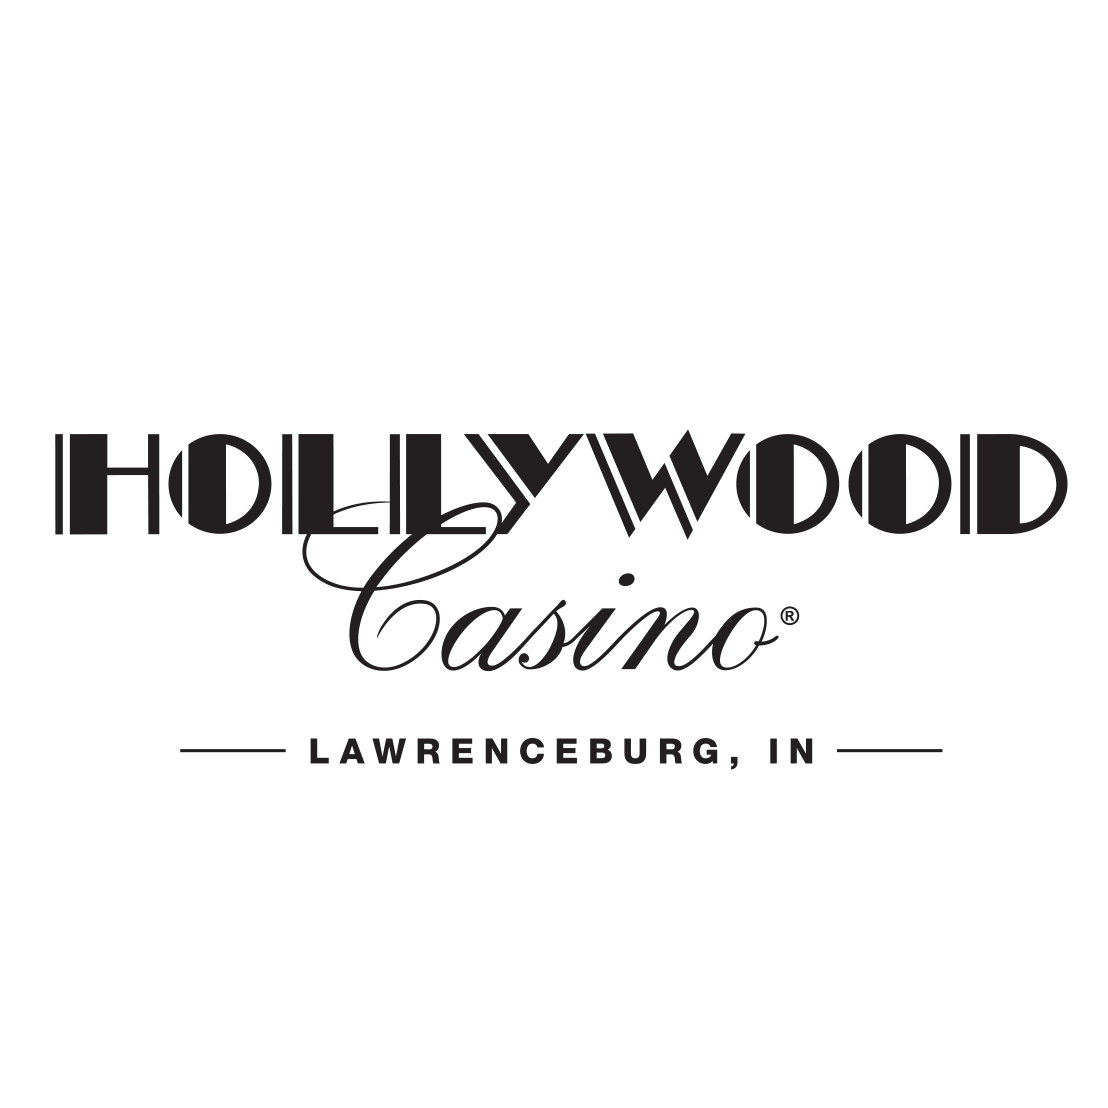 is hollywood casino in lawrenceburg indiana smoke free